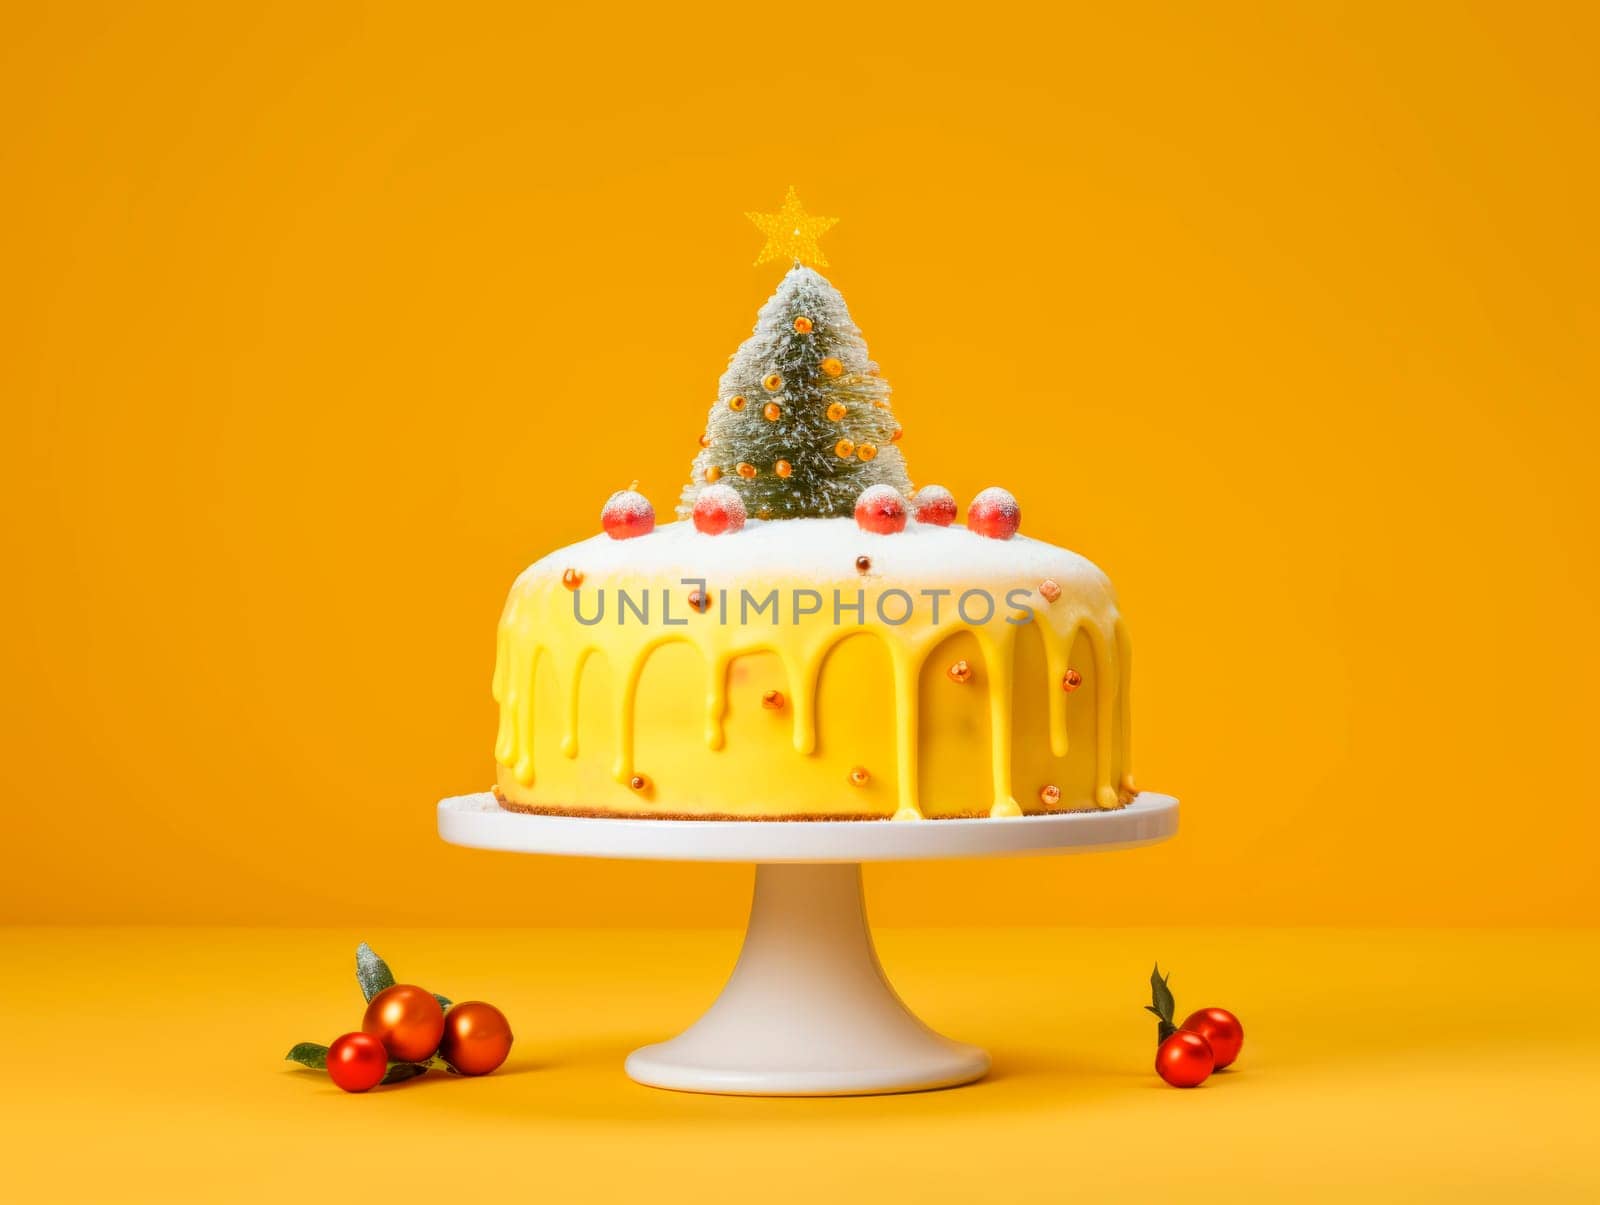 An unusual creative Christmas cake. Yellow background. Christmas dessert.